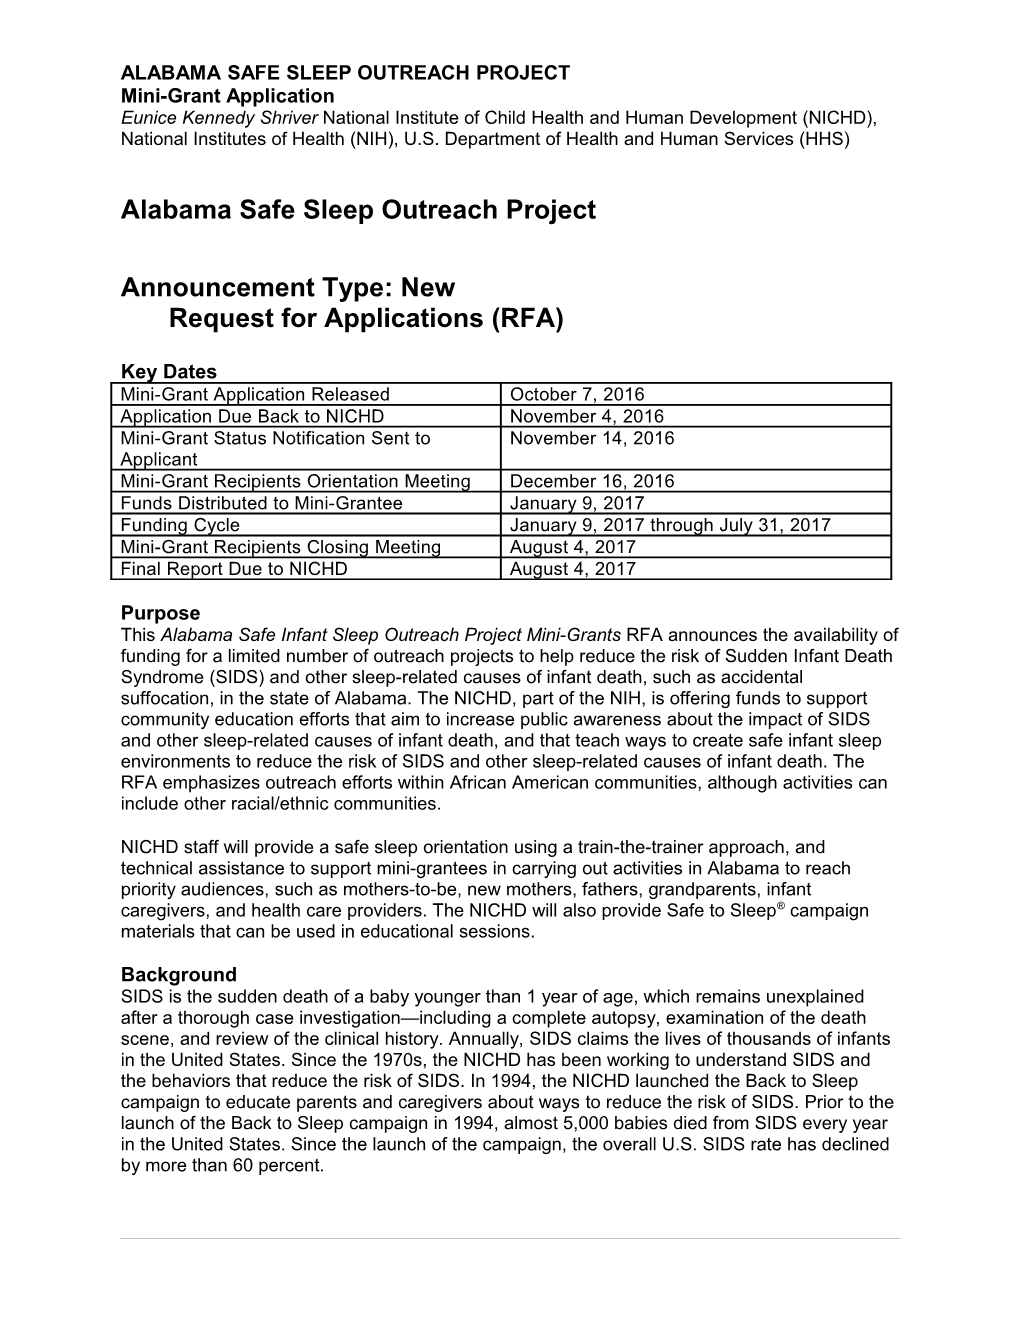 Alabama Safe Sleep Outreach Project Mini-Grant Application